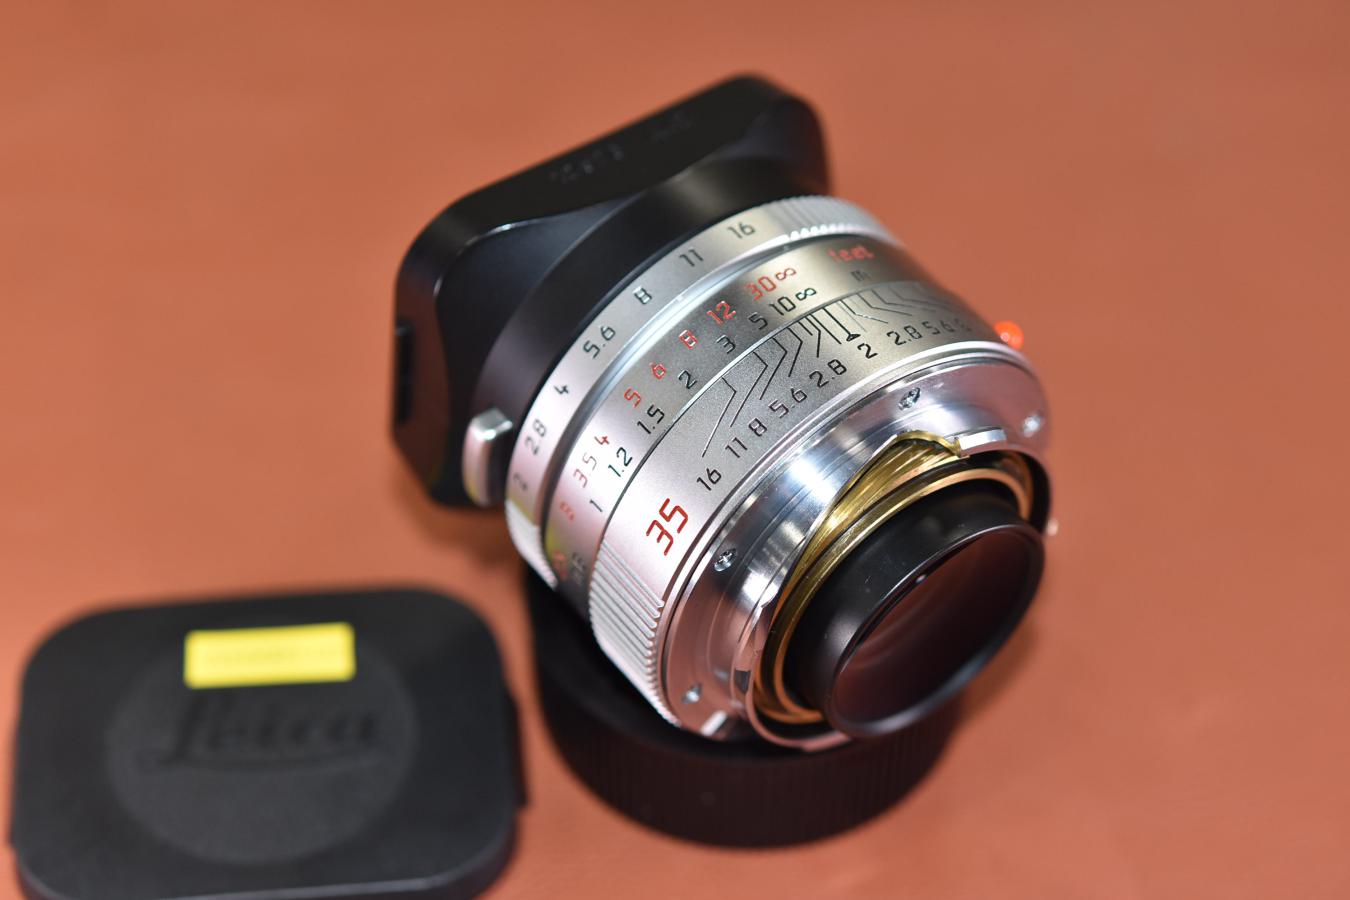 Leica SUMMICRON-M f2/35mm ASPH. 6bit